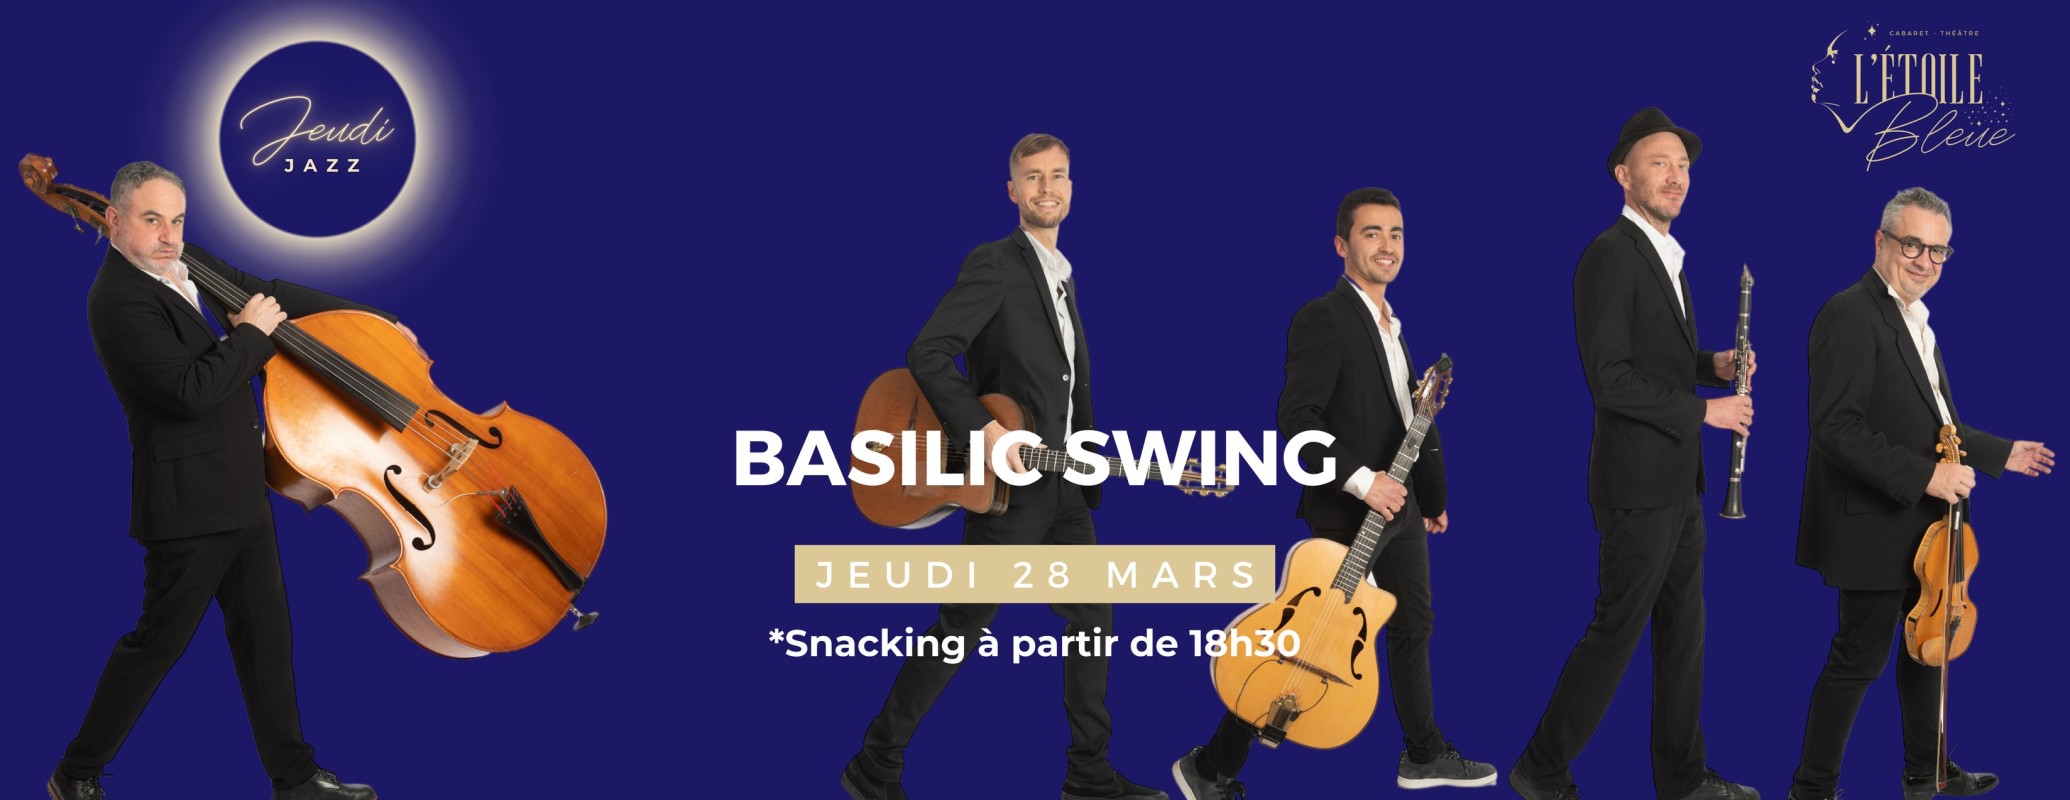 Basilic swing 0324